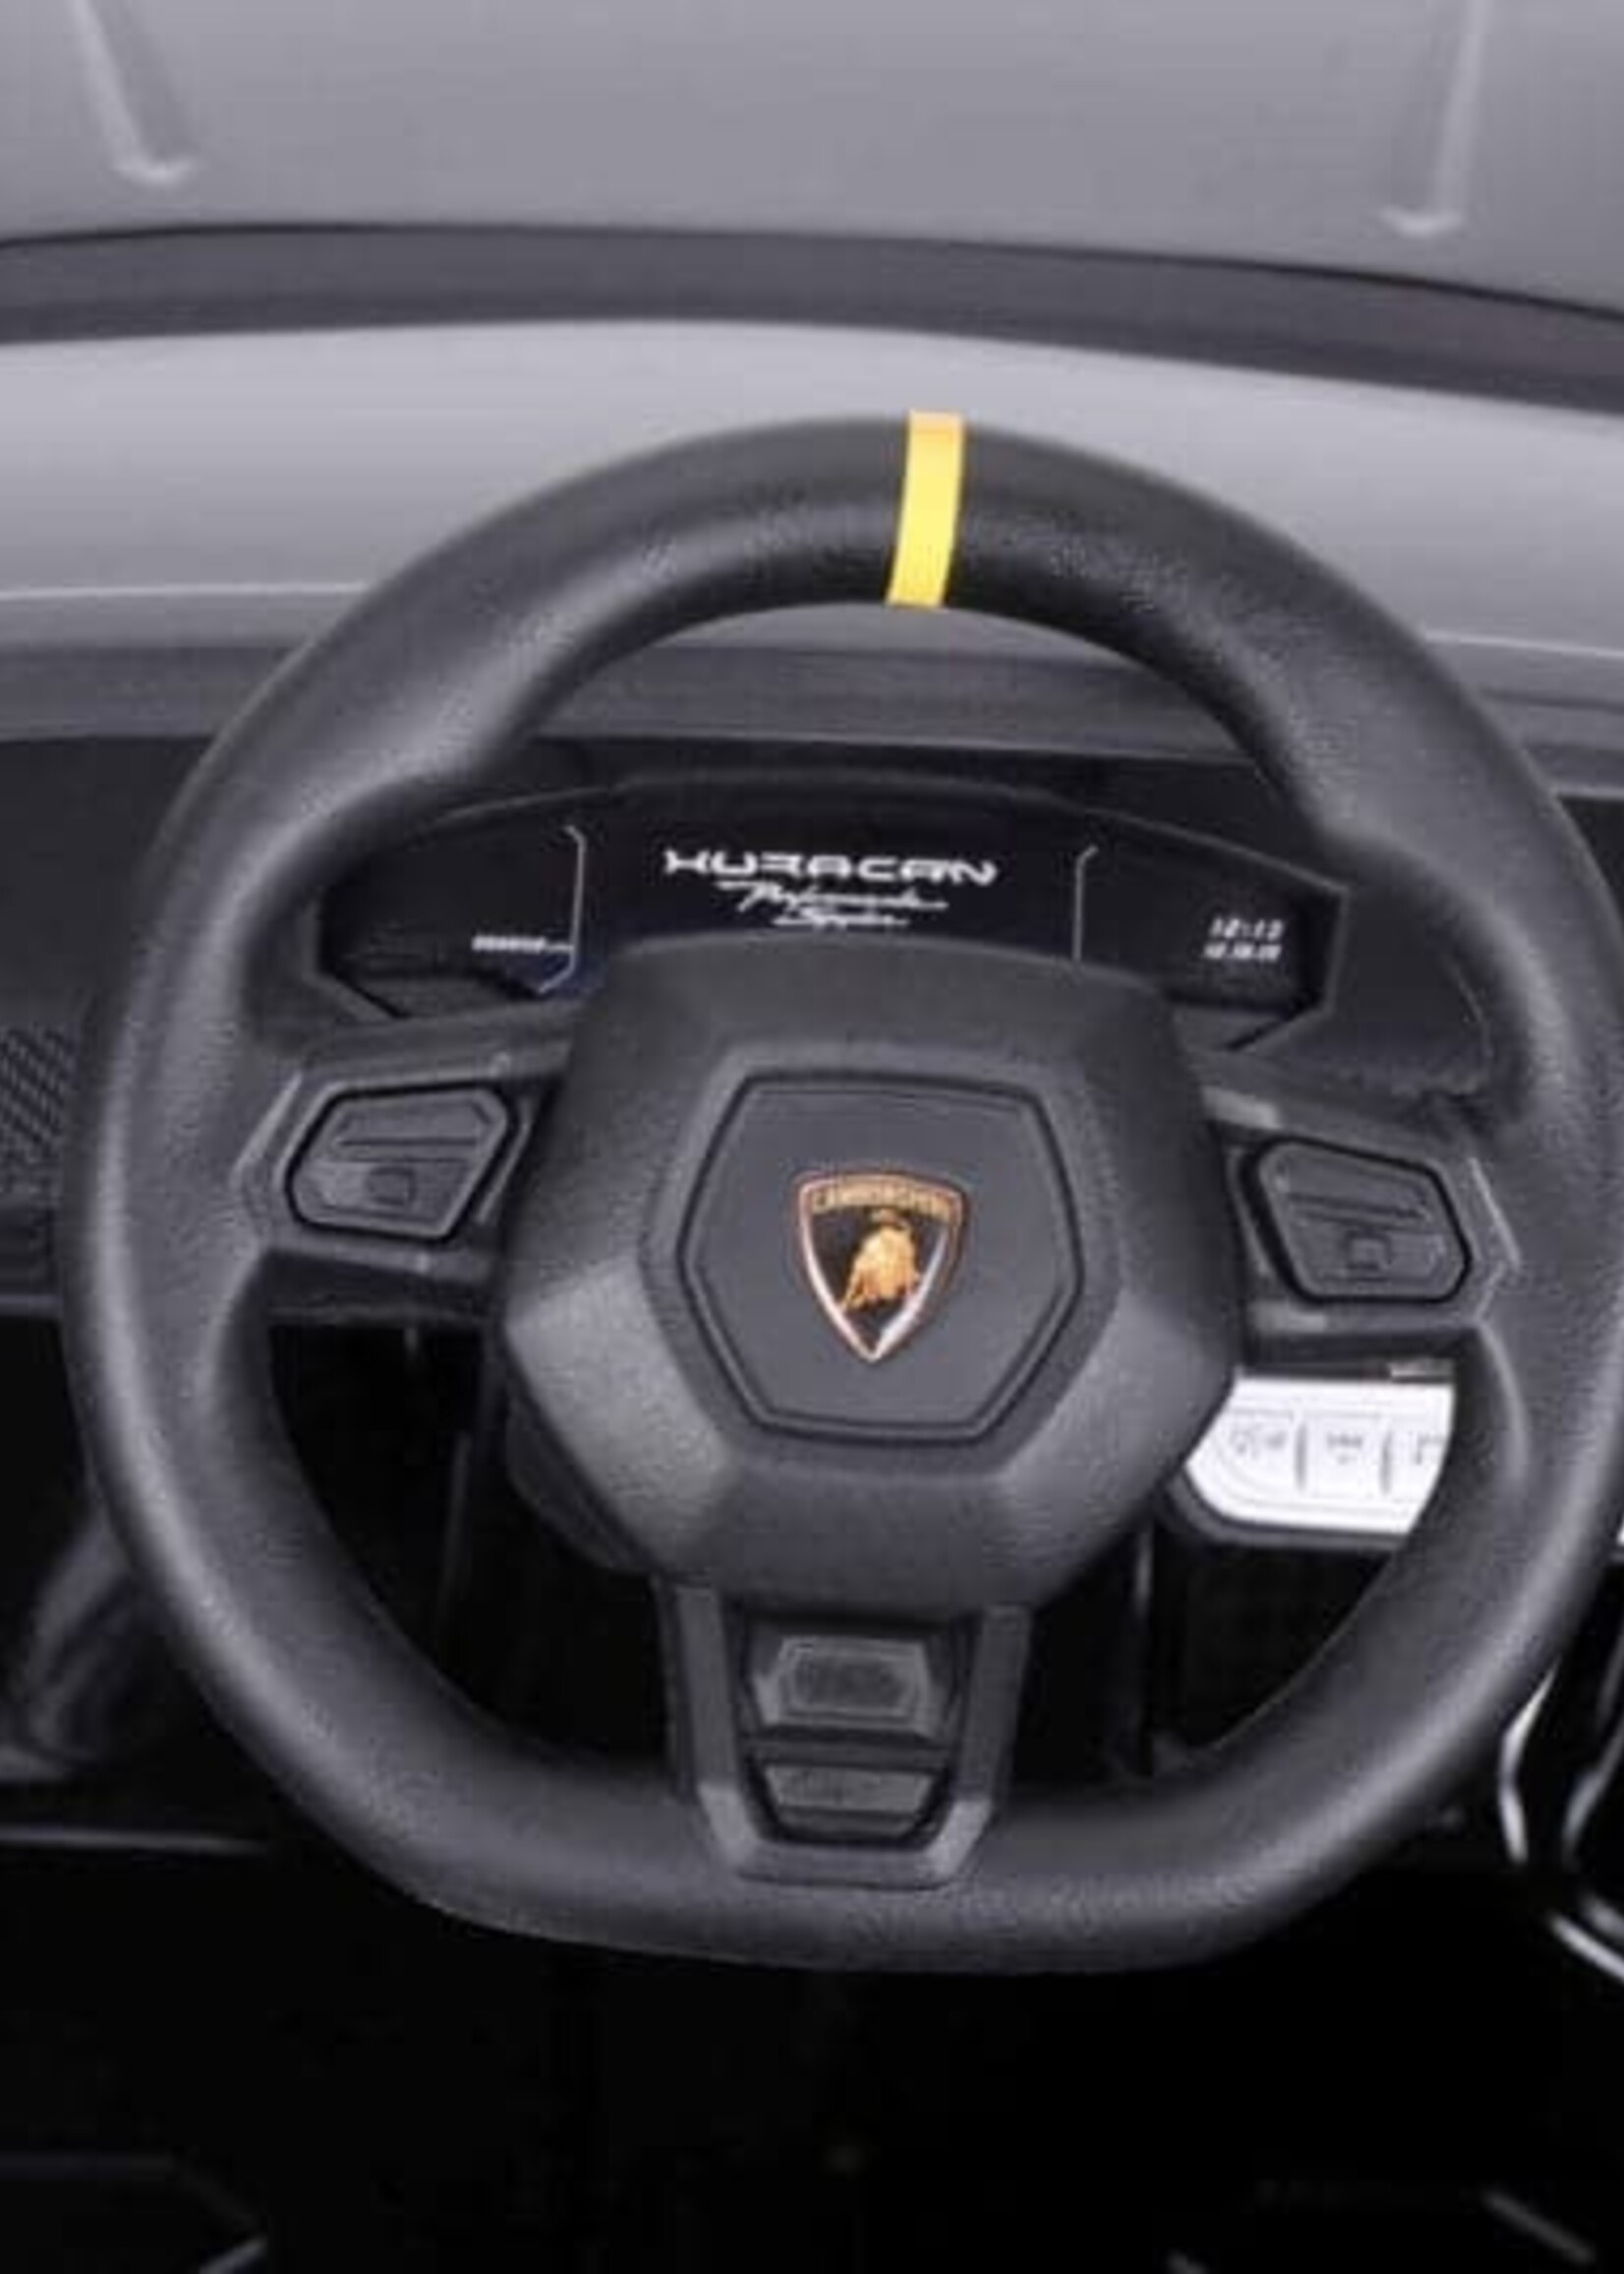 Lamborghini Huracan witte elektrische Kinderauto